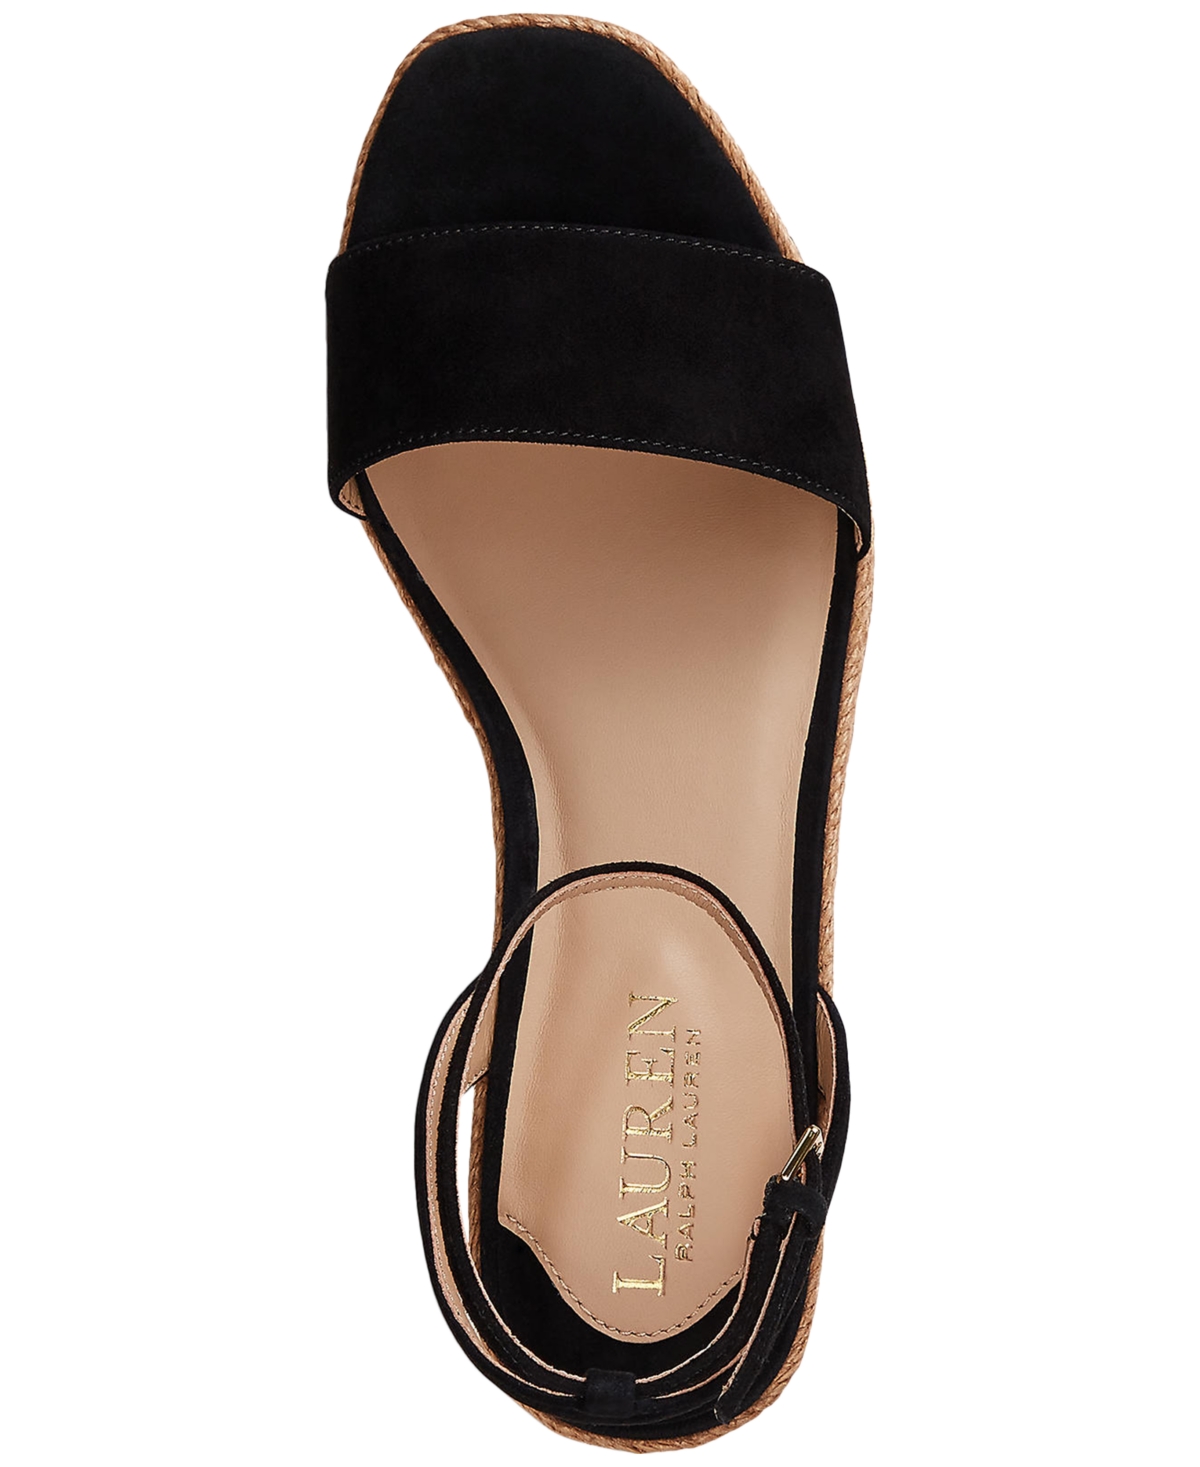 Shop Lauren Ralph Lauren Women's Leona Espadrille Platform Wedge Sandals In Soft White